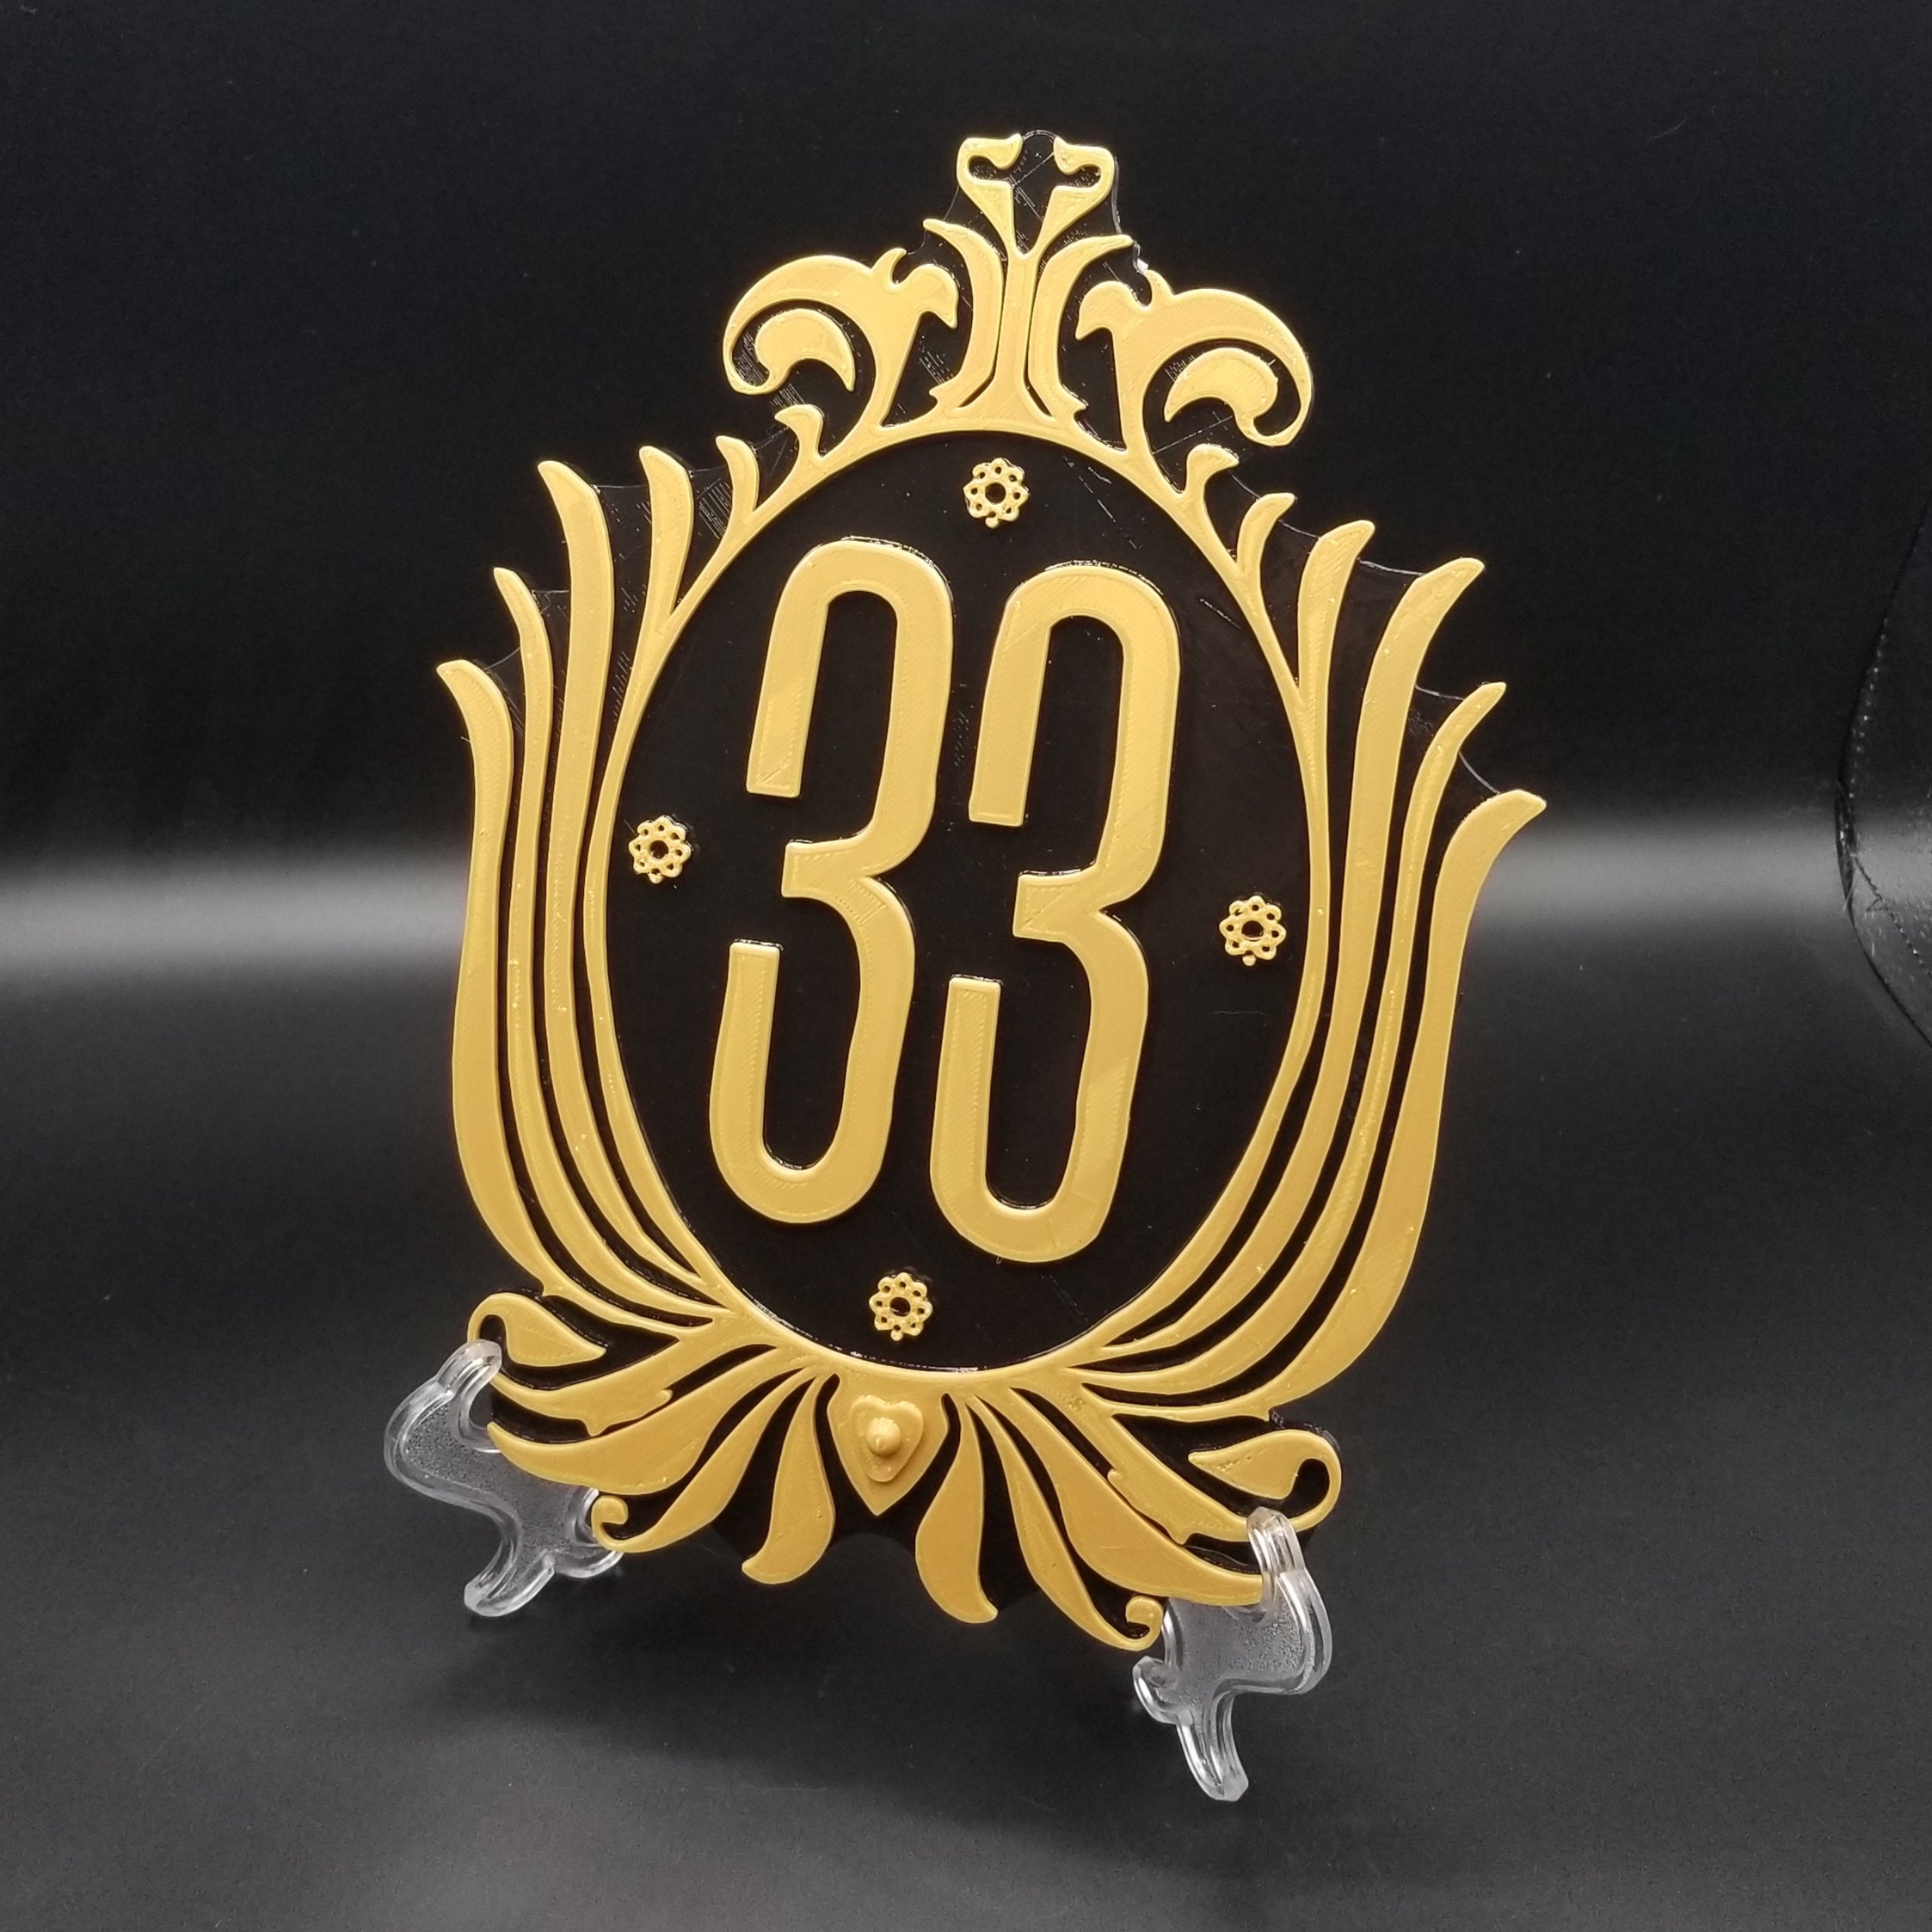 Club 33 Inspired Car & Fridge Magnet Disney / Park Prop Inspired Replica 